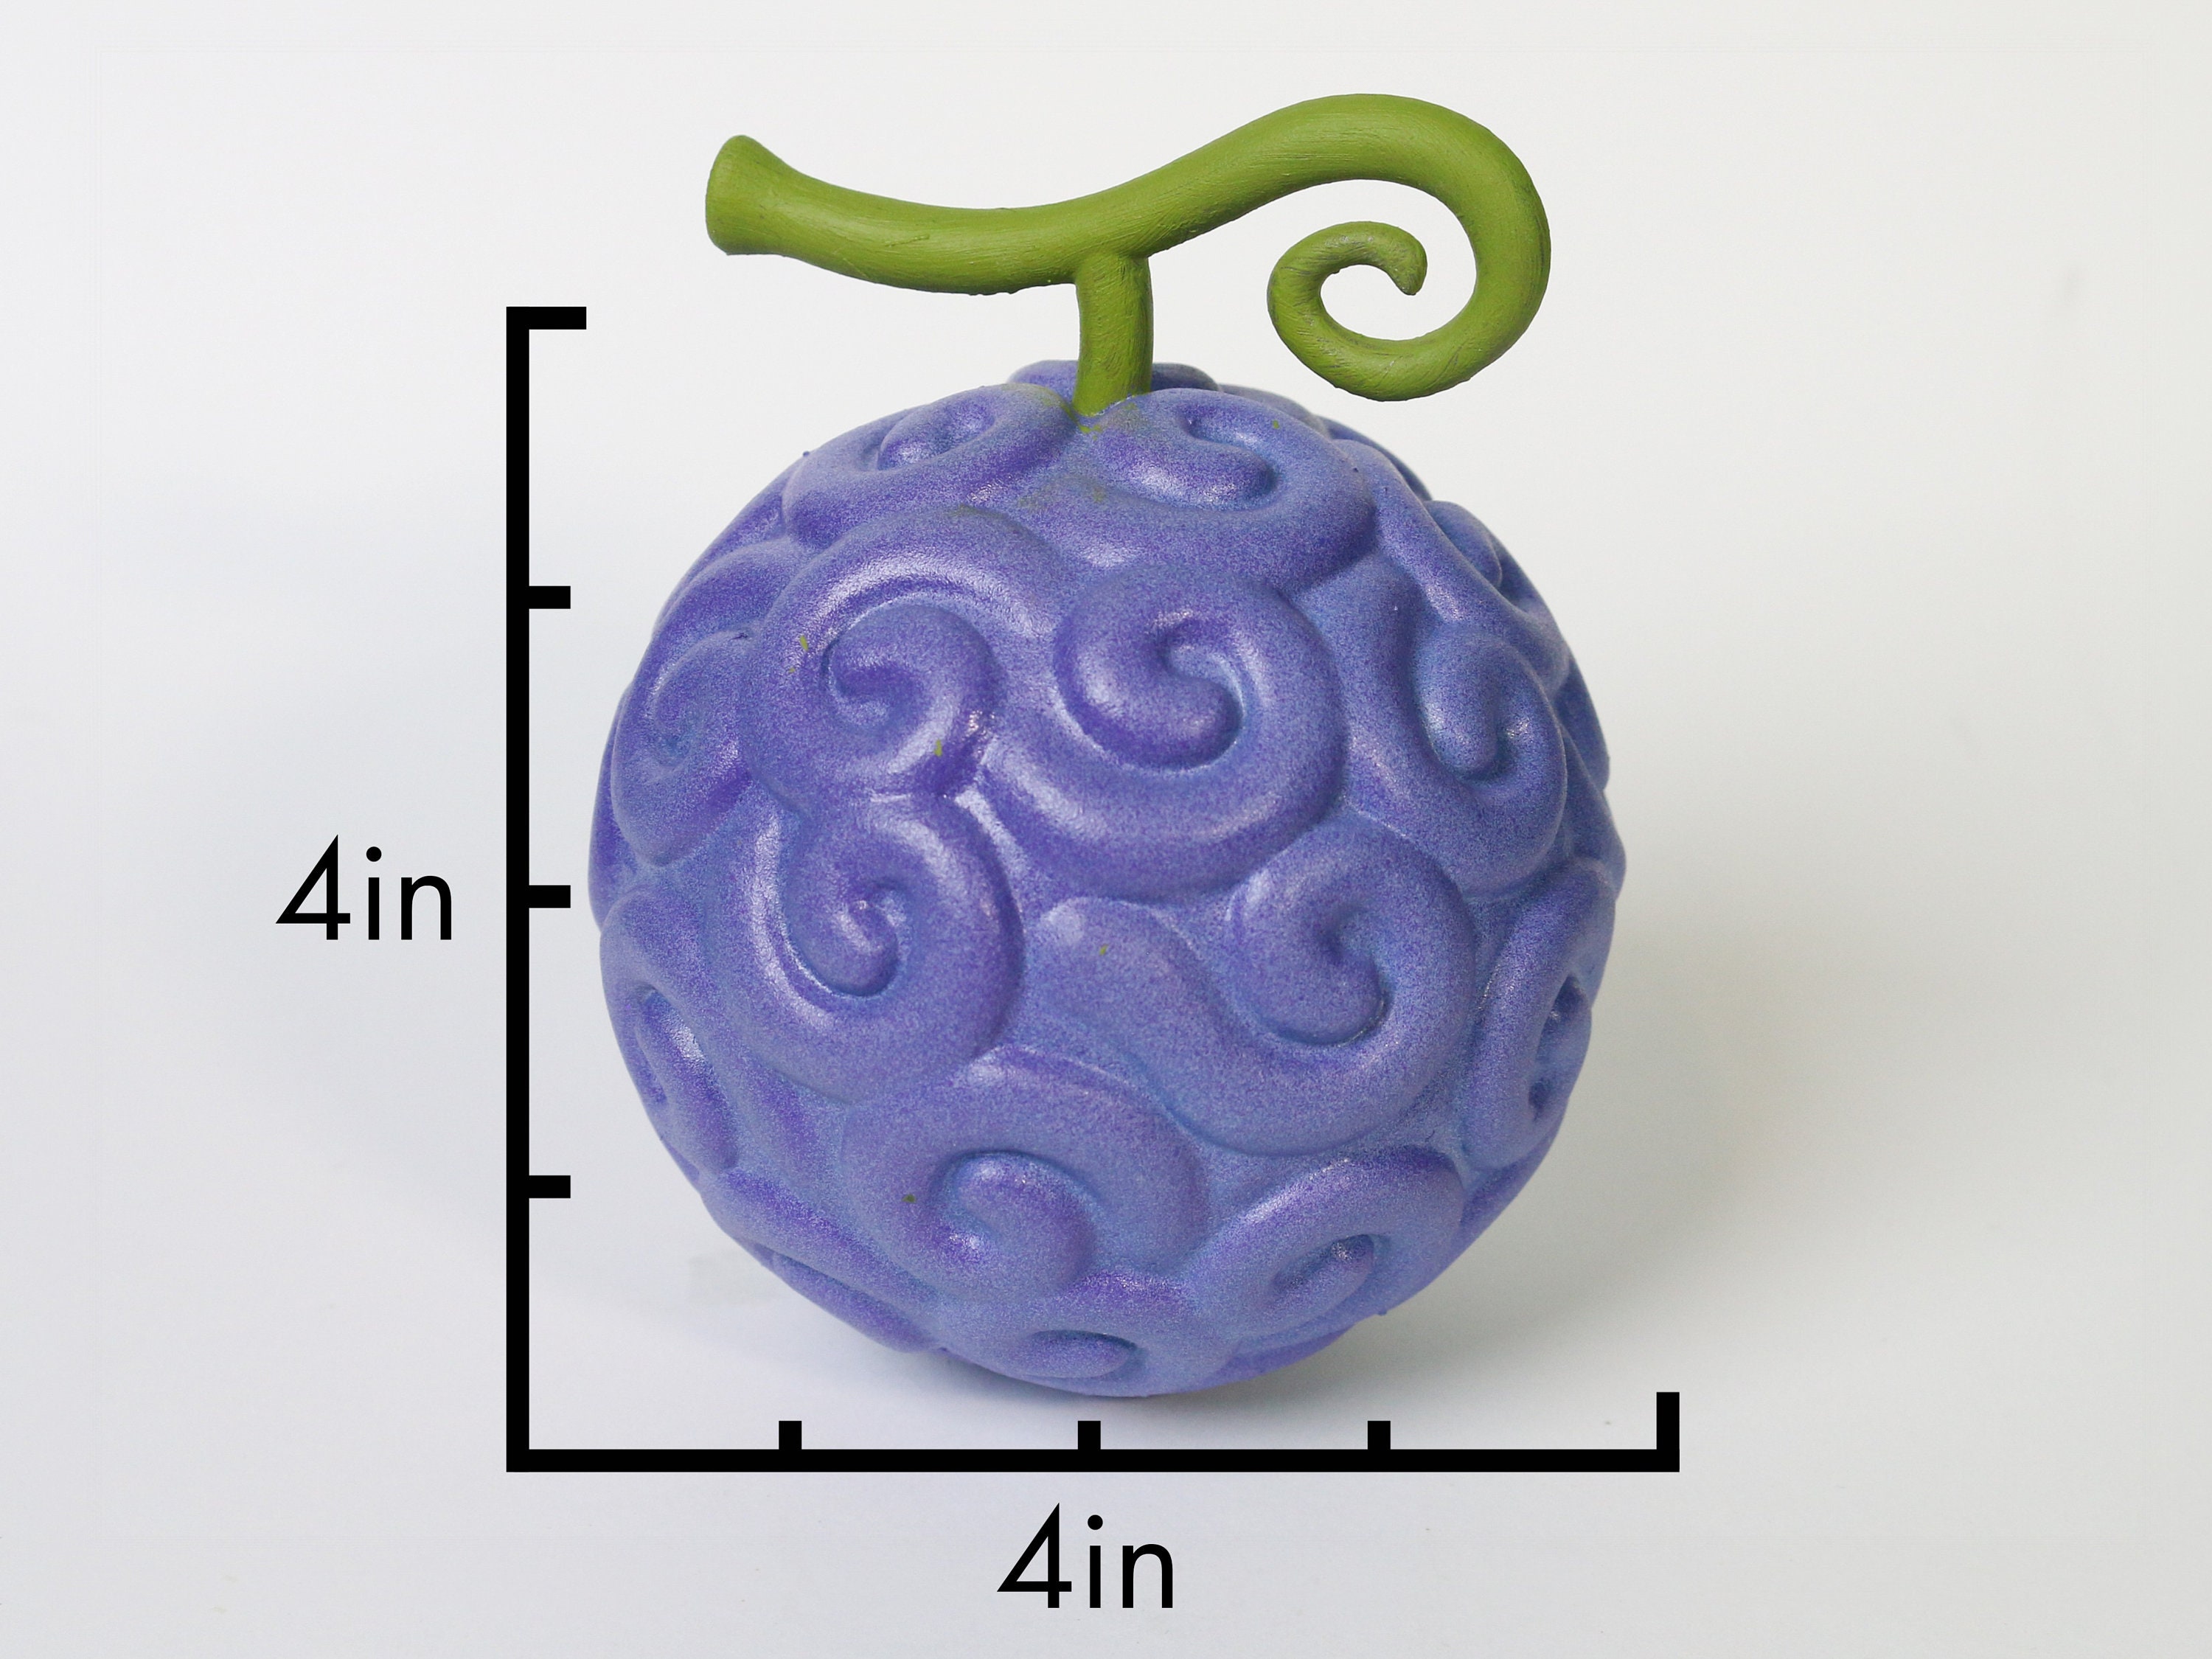 Devilfruit best 3D printing models・40 designs to download・Cults